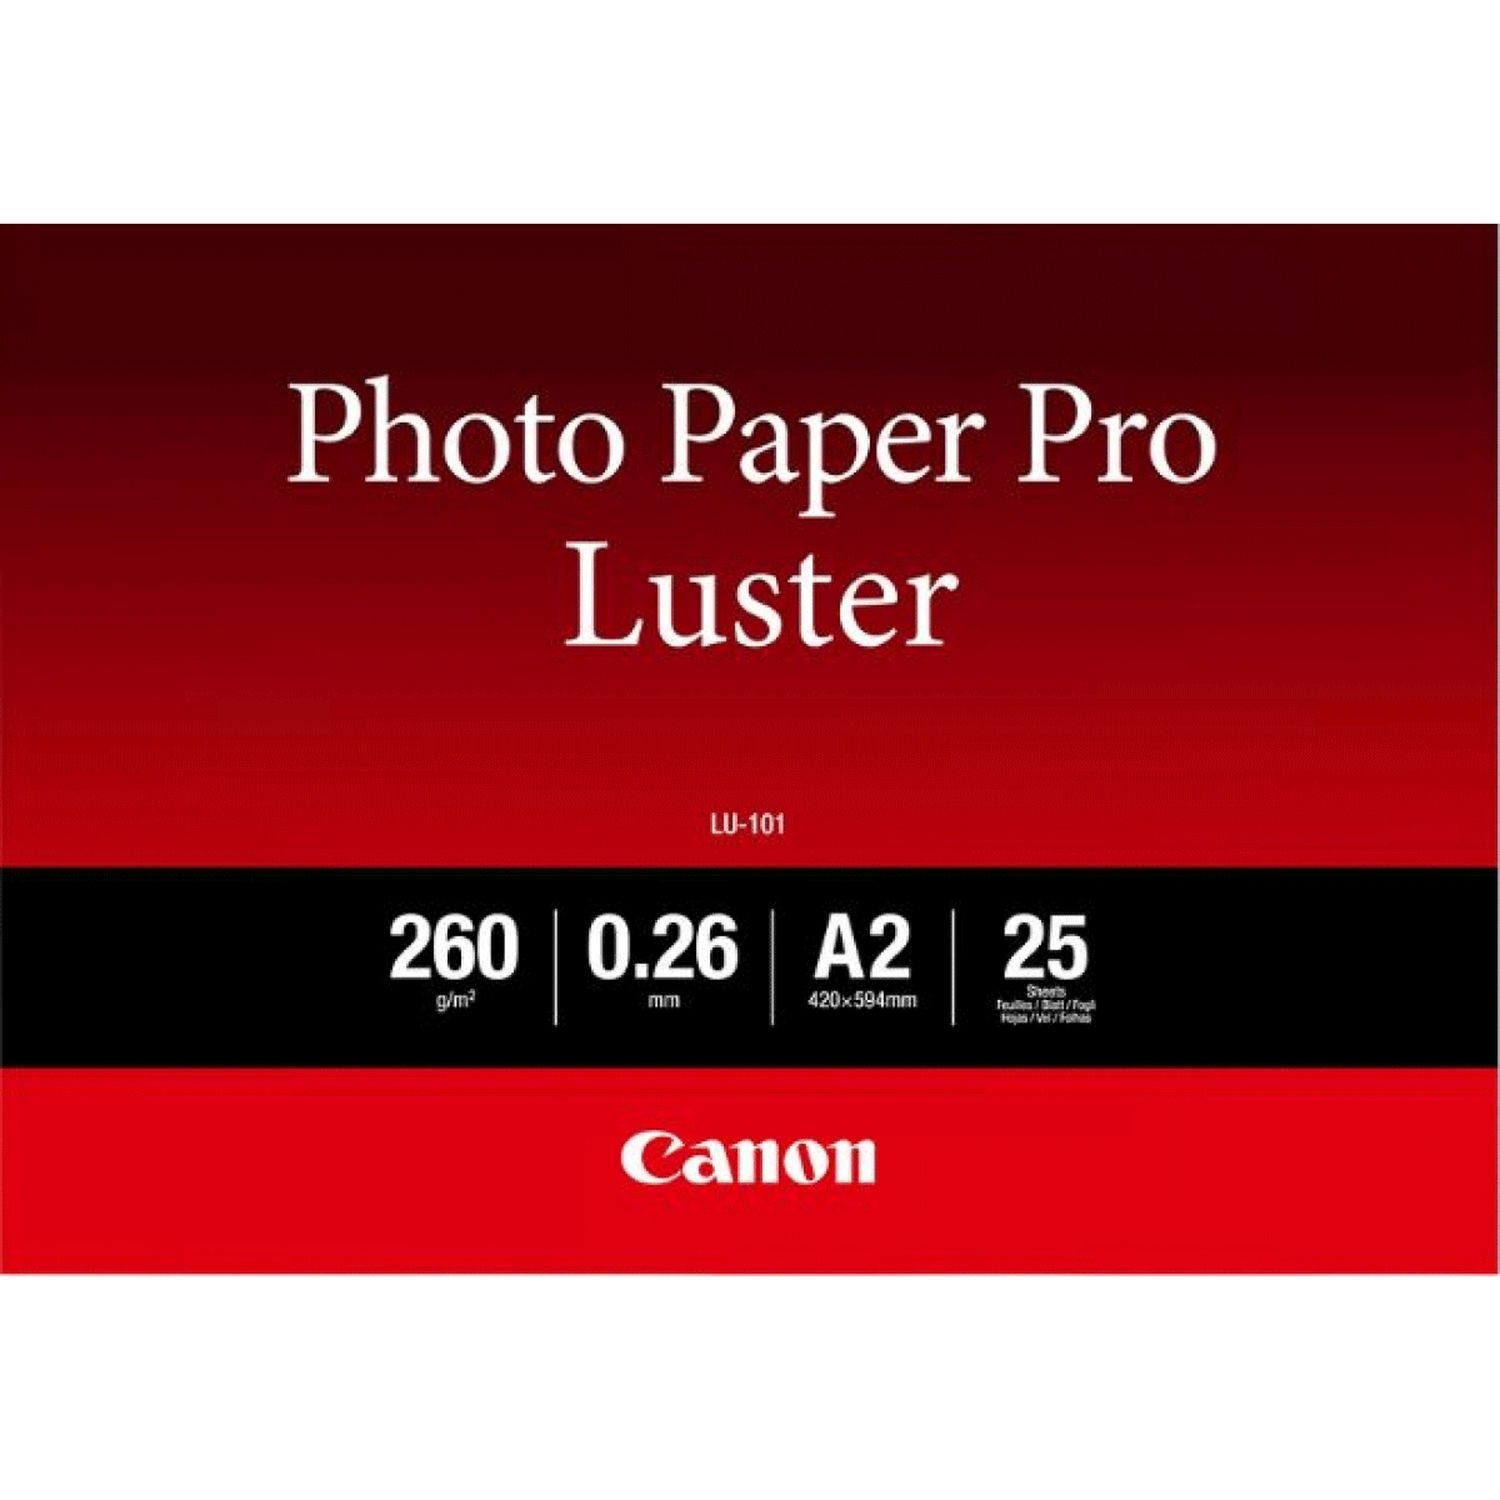 Original Canon Photo Paper Pro LU-101 A2 Luster Paper - 25 Sheets (6211B026)